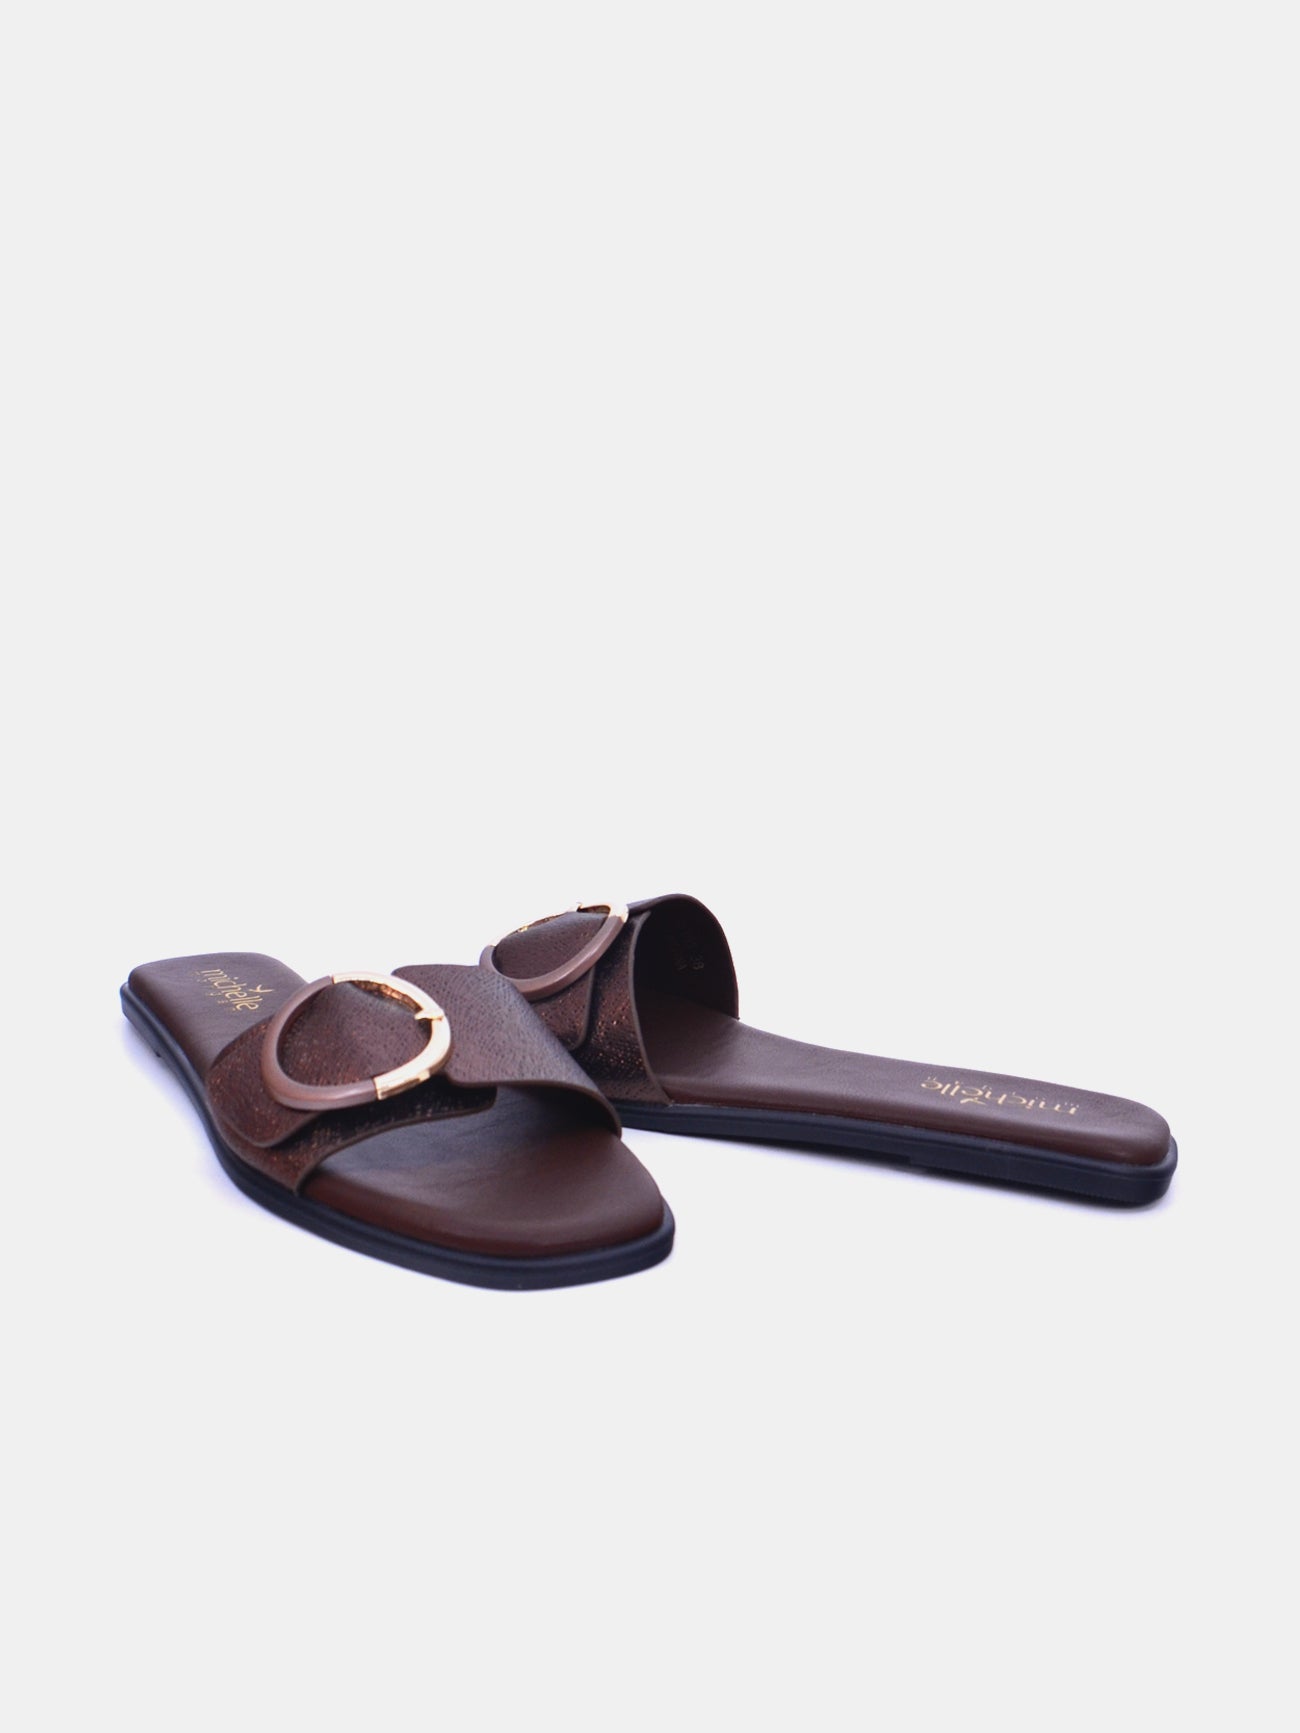 Michelle Morgan 114RL105 Women's Flat Sandals #color_Brown